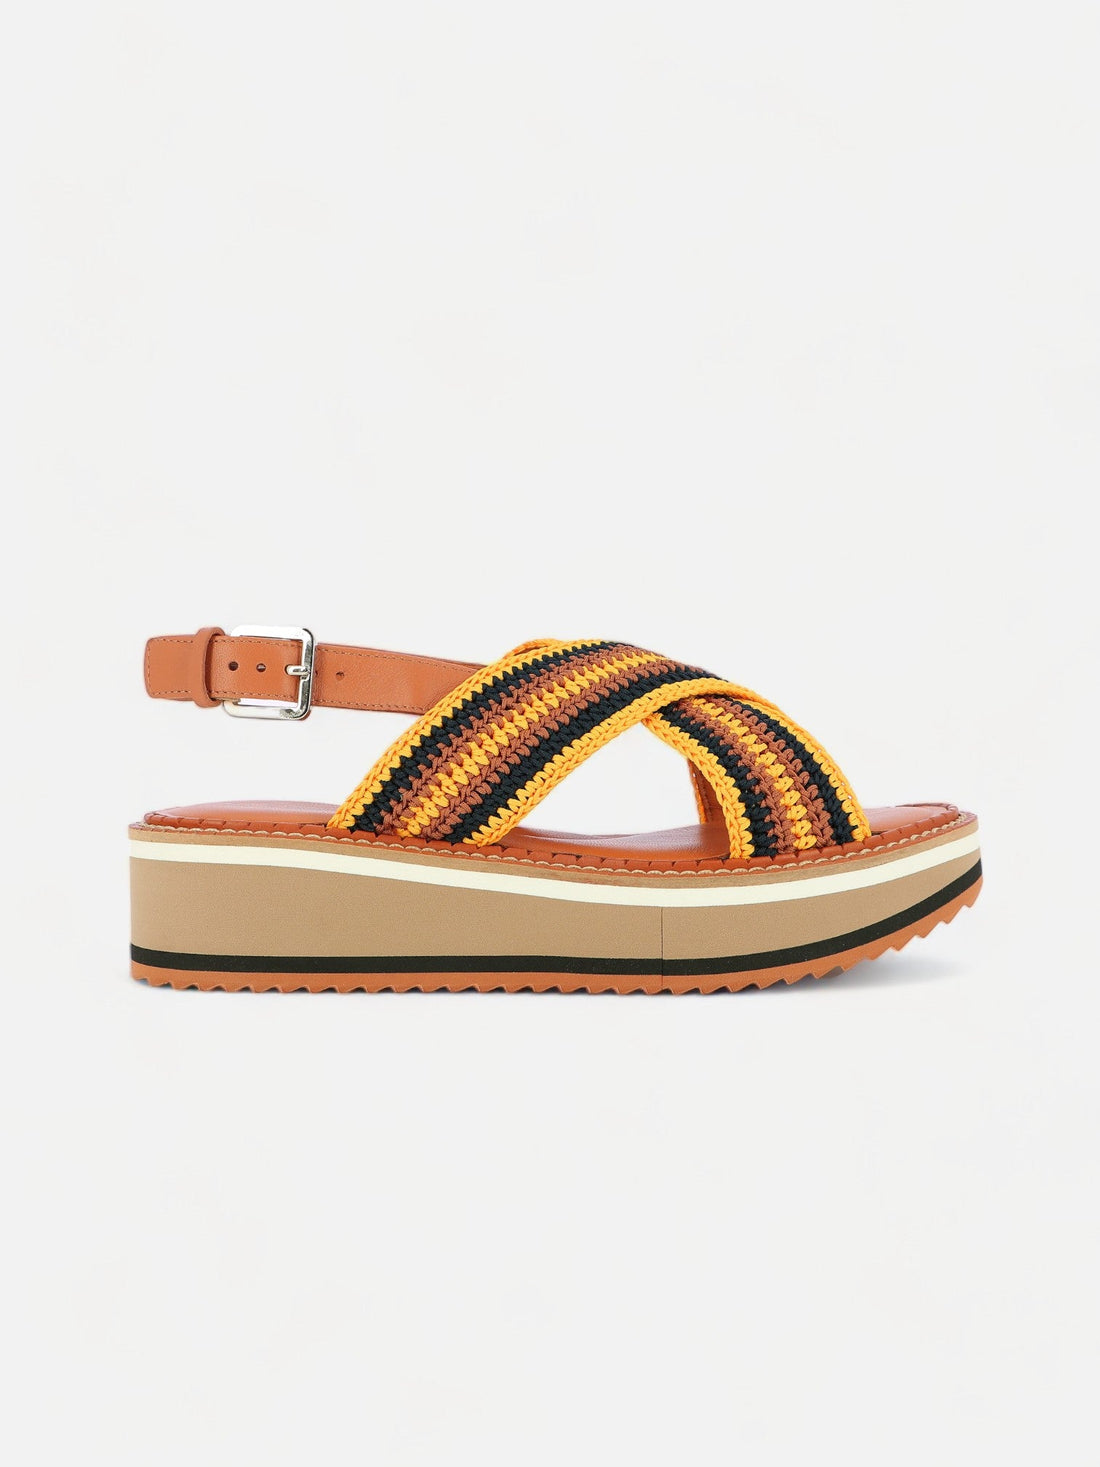 SANDALS - FADEN sandals, mango crochet - 3606063965521 - Clergerie Paris - Europe